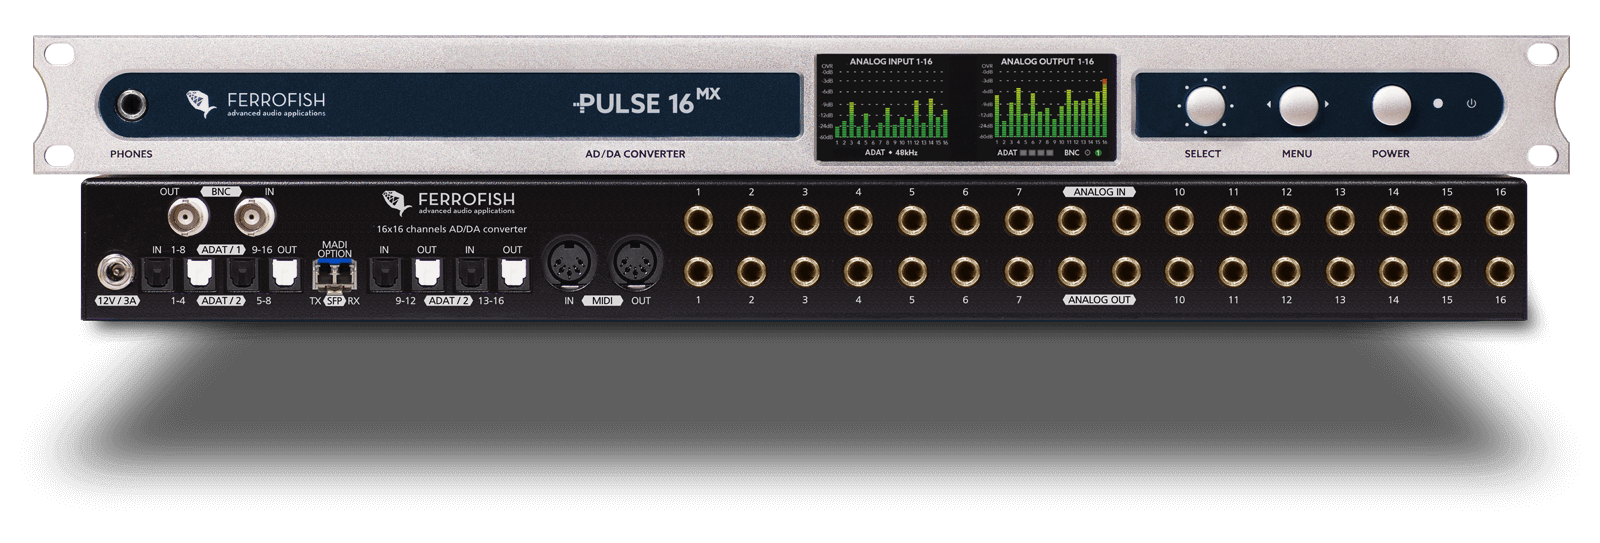 New Ferrofish Pulse 16 MX w/ Analog I/O Modified for CV/Gate | High Quality MADI Converter